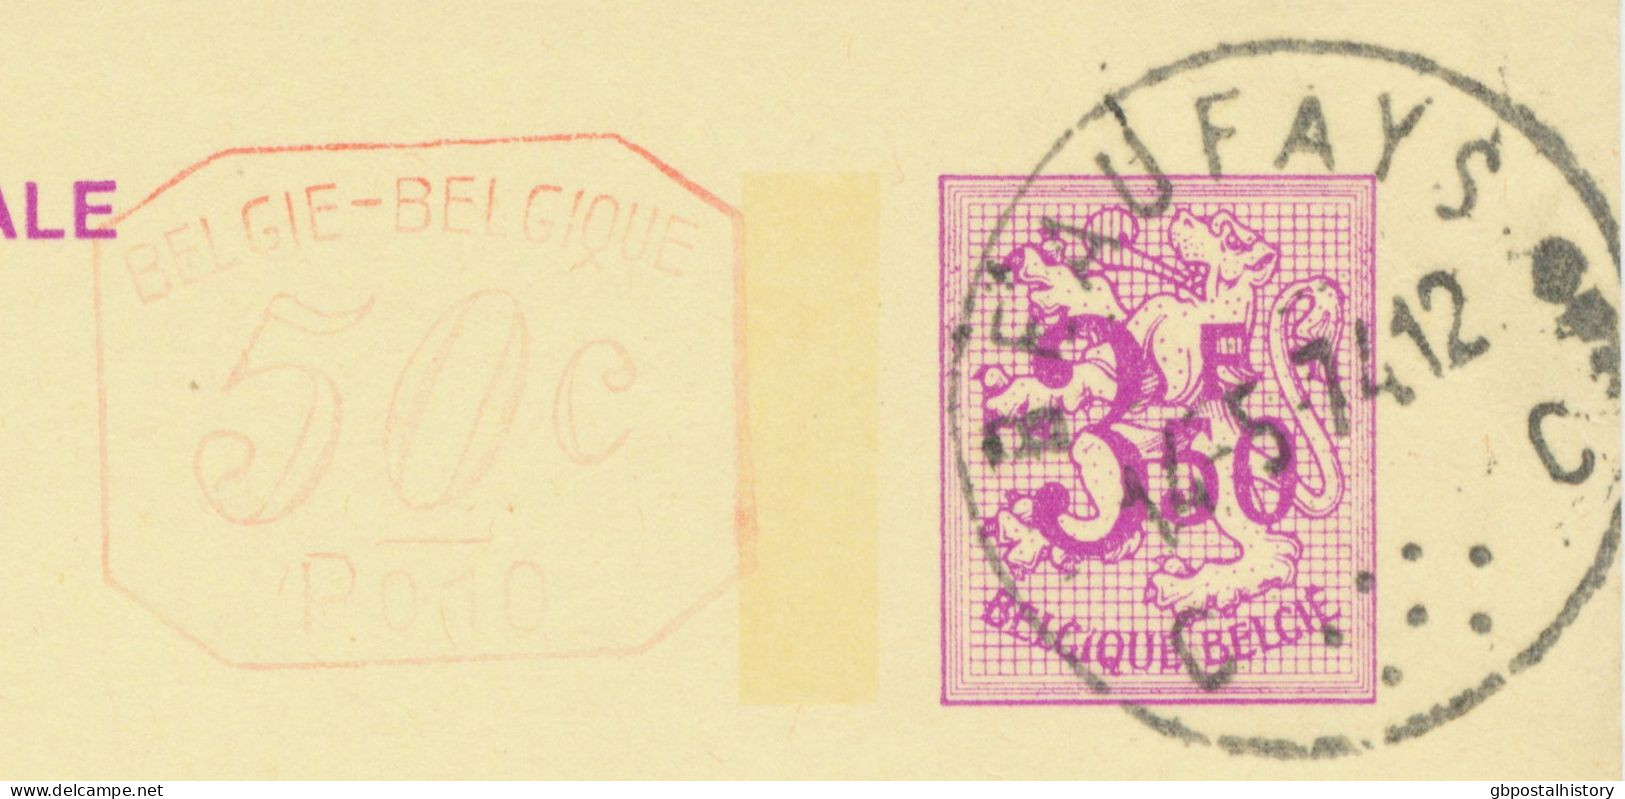 BELGIUM VILLAGE POSTMARKS  BEAUFAYS C (now Chaudfontaine) SC With Dots 1974 (Postal Stationery 3,50 + 0,50 F, PUBLIBEL 2 - Puntstempels